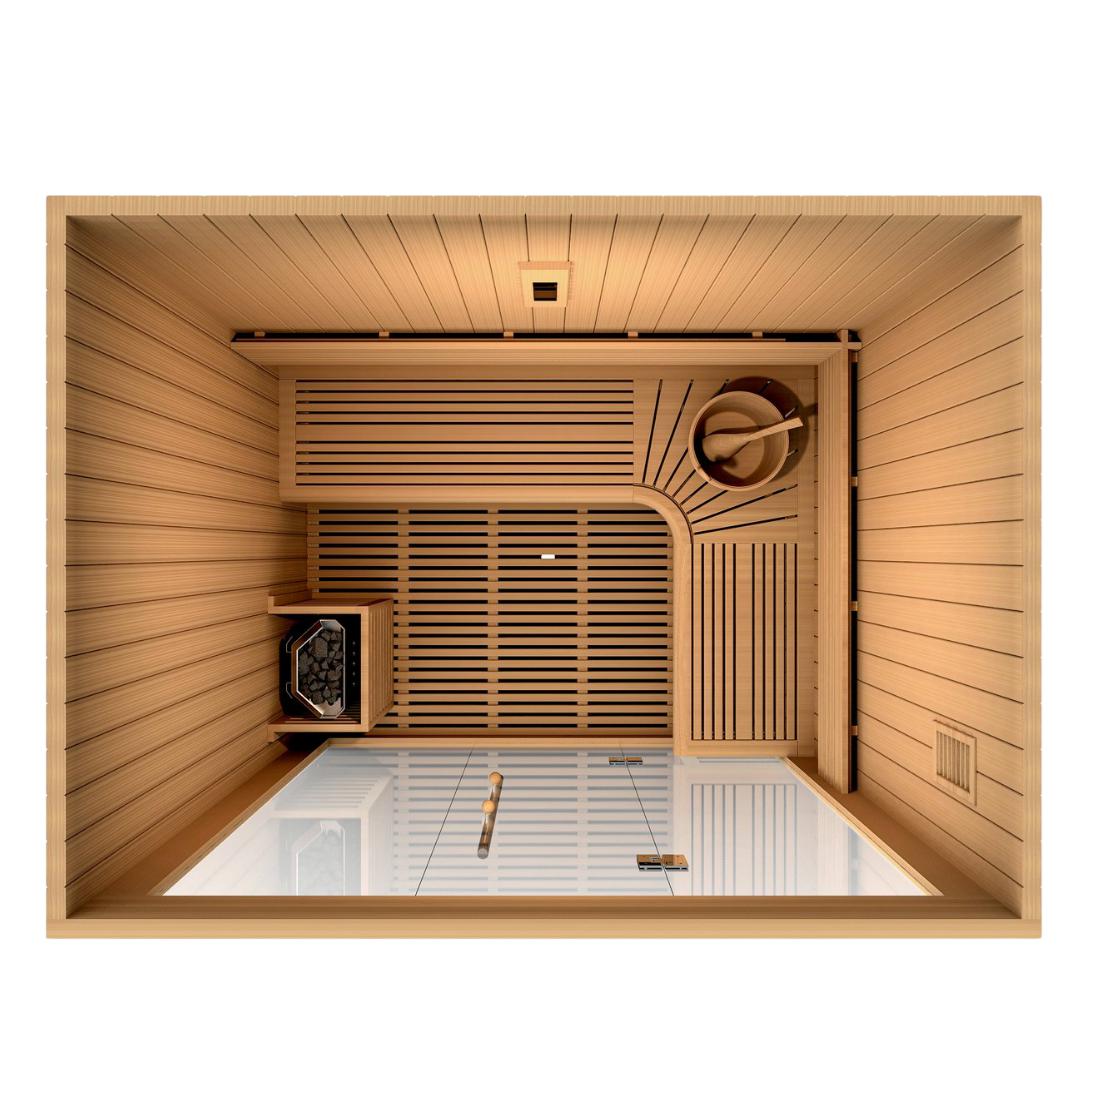 Golden Designs "Copenhagen Edition" 3-Person Traditional Steam Sauna - Canadian Red Cedar - GDI-7389-01 top down layout view.